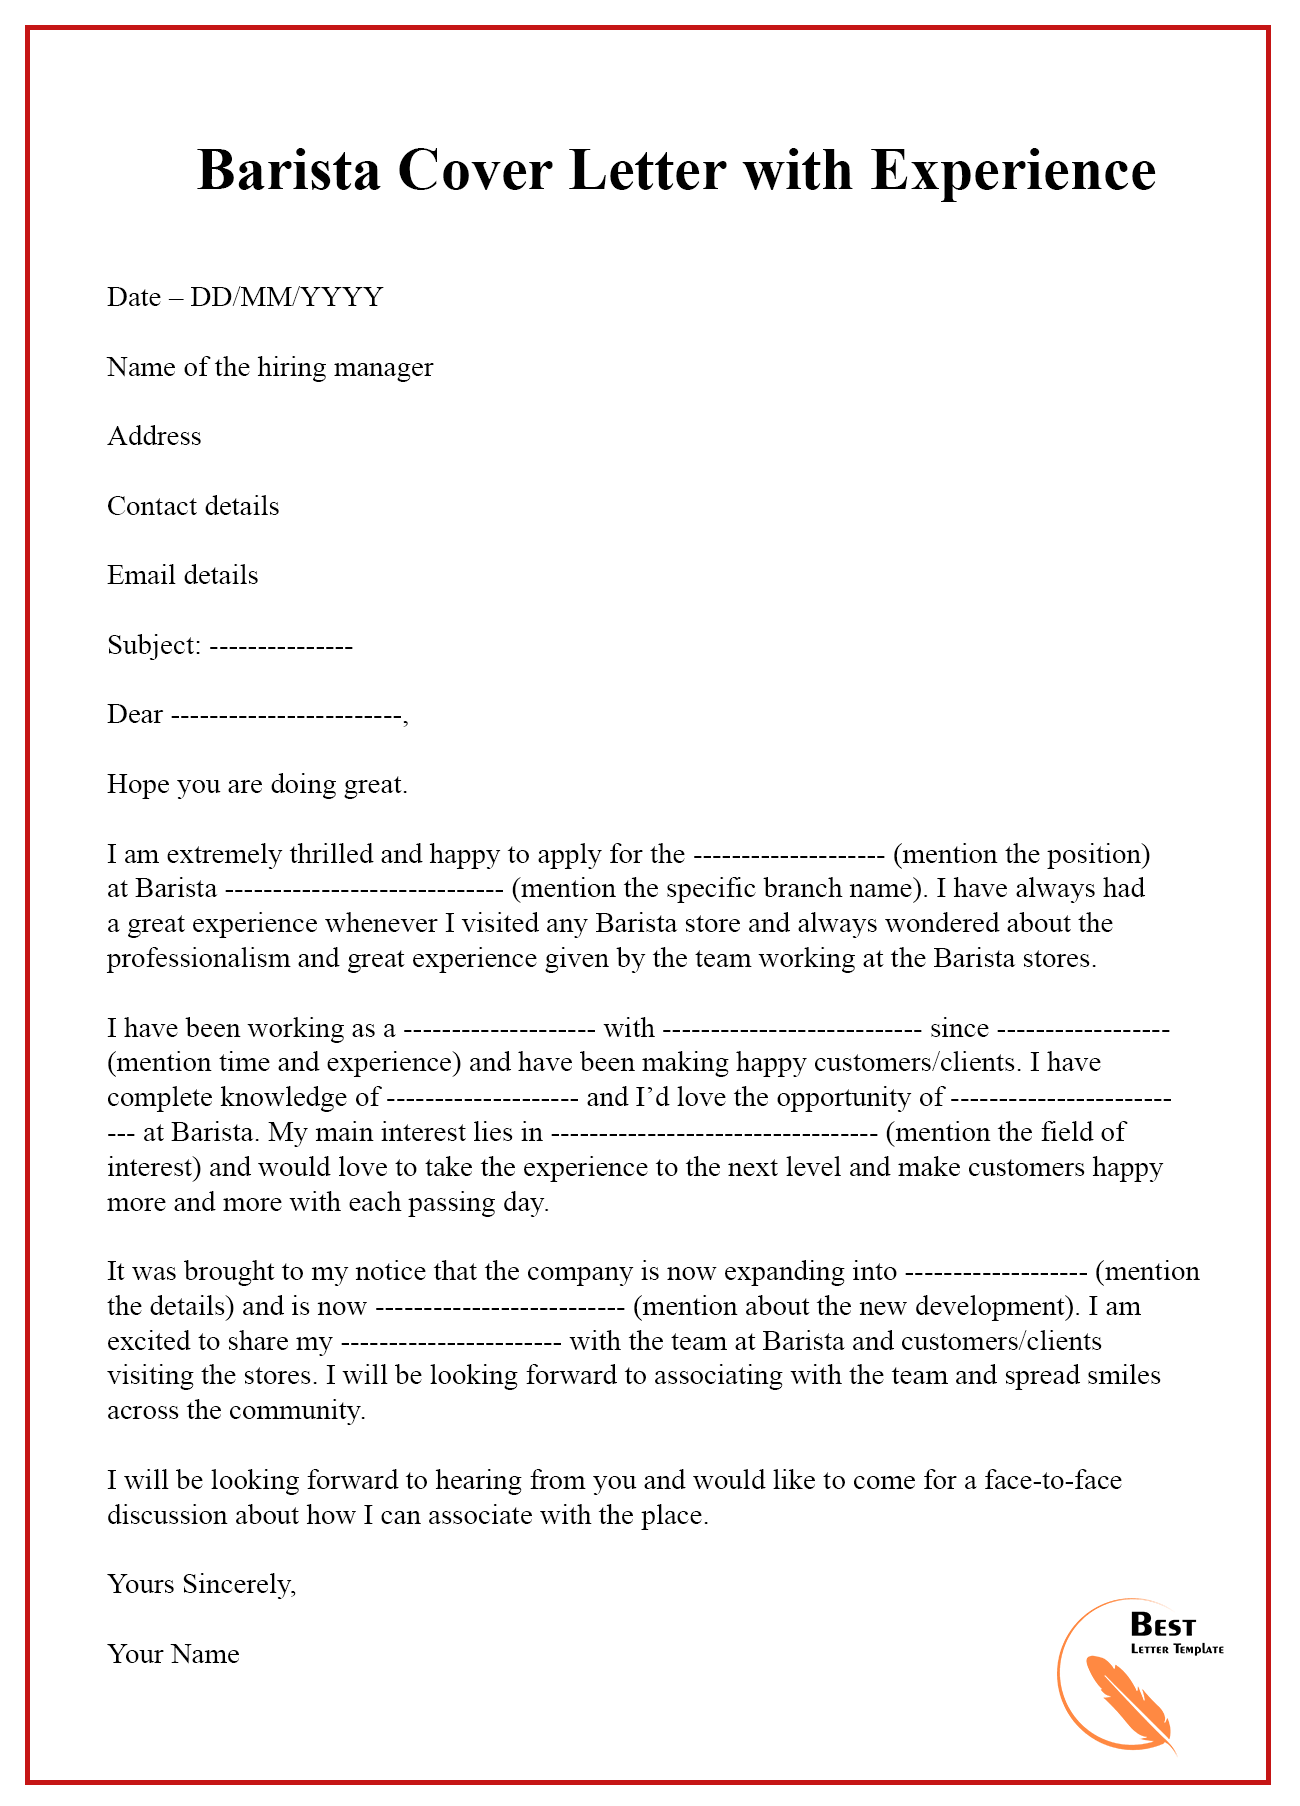 best application letter for barista